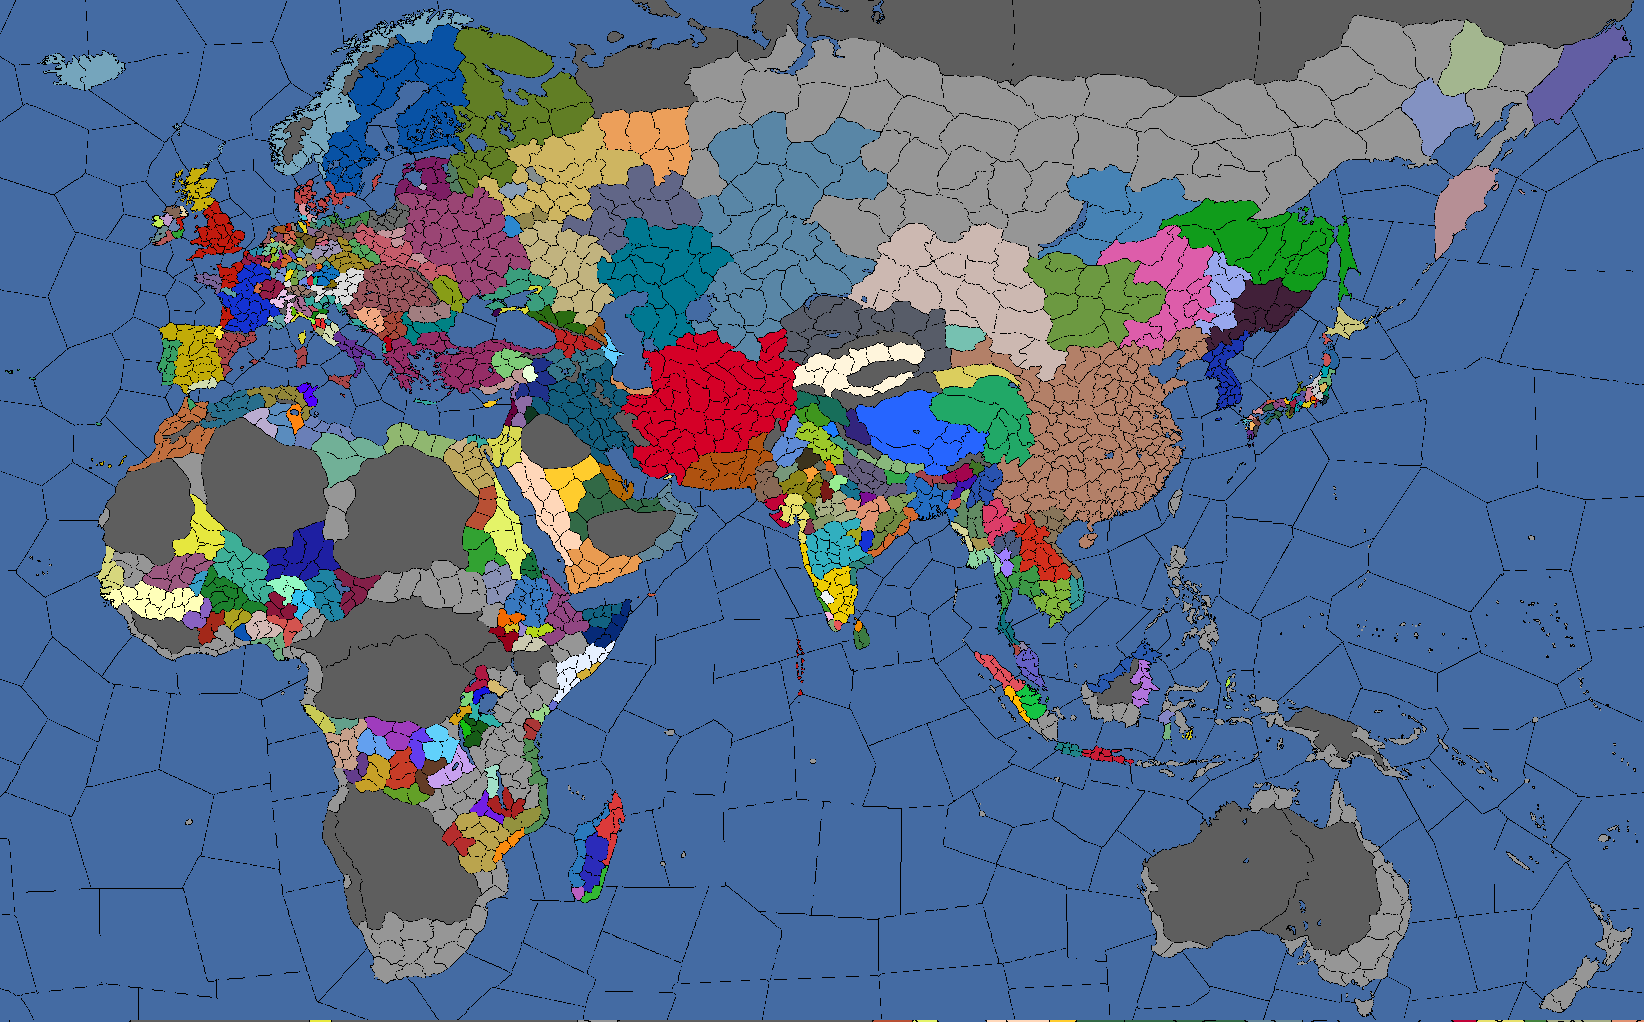 Maps for mapping. Европа Универсалис 4 карта мира 1444. Europa Universalis 4 карта Азии. Карта Европы Универсалис 4 1444 год. Europa Universalis 4 карта 1444.